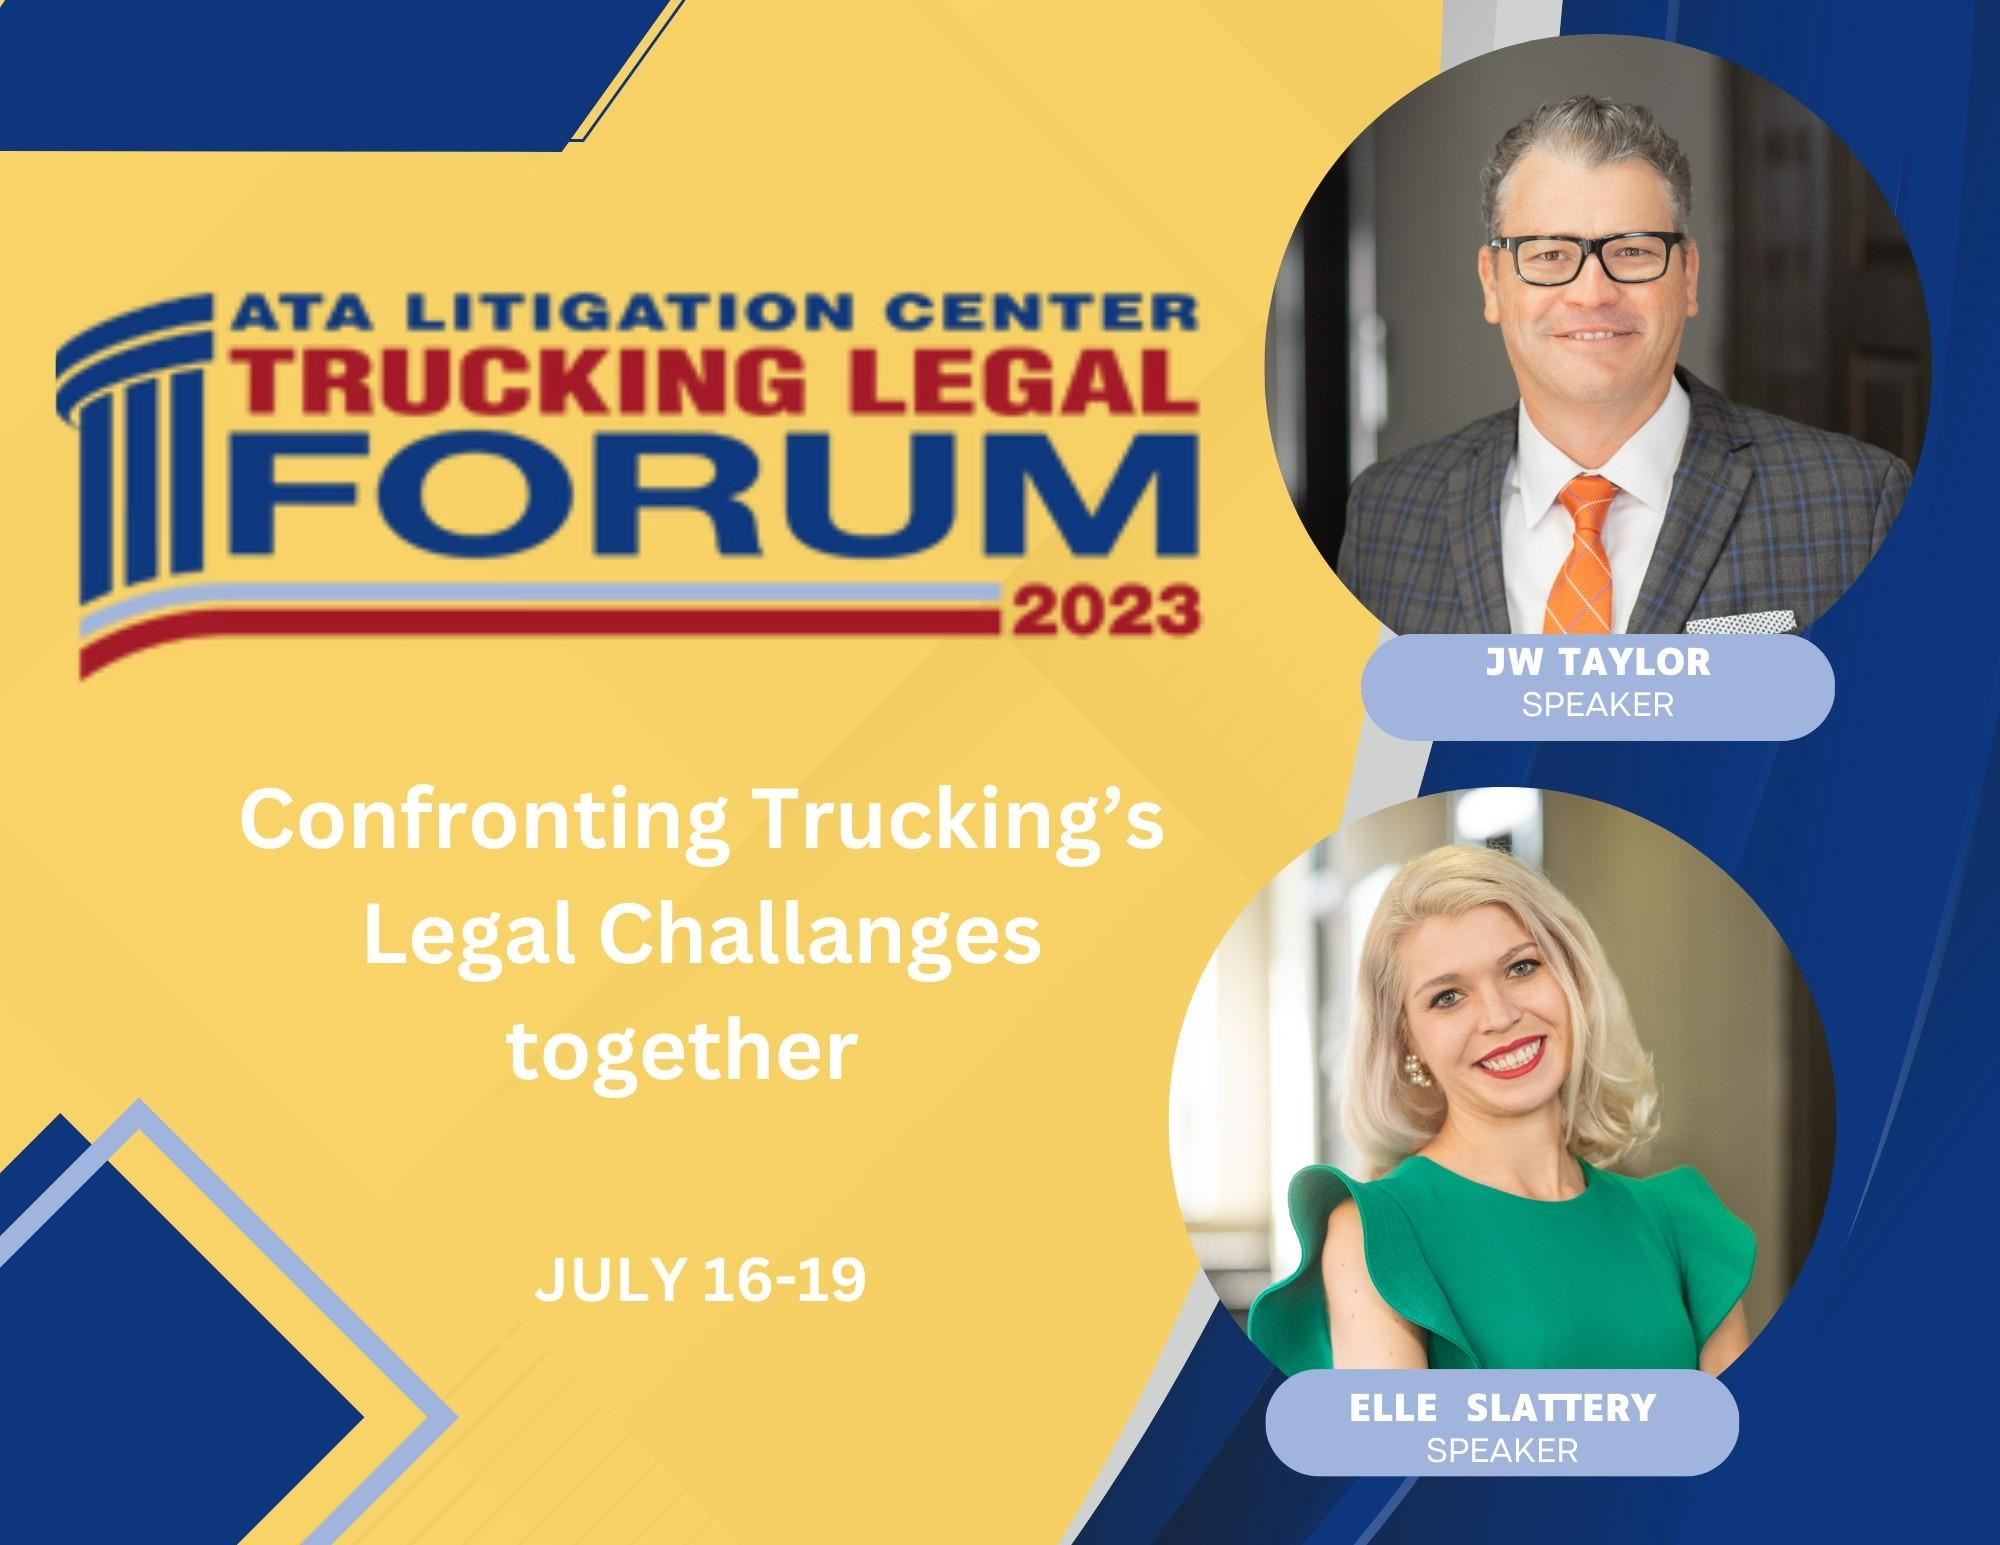 American Trucking Association’s Legal Forum in California